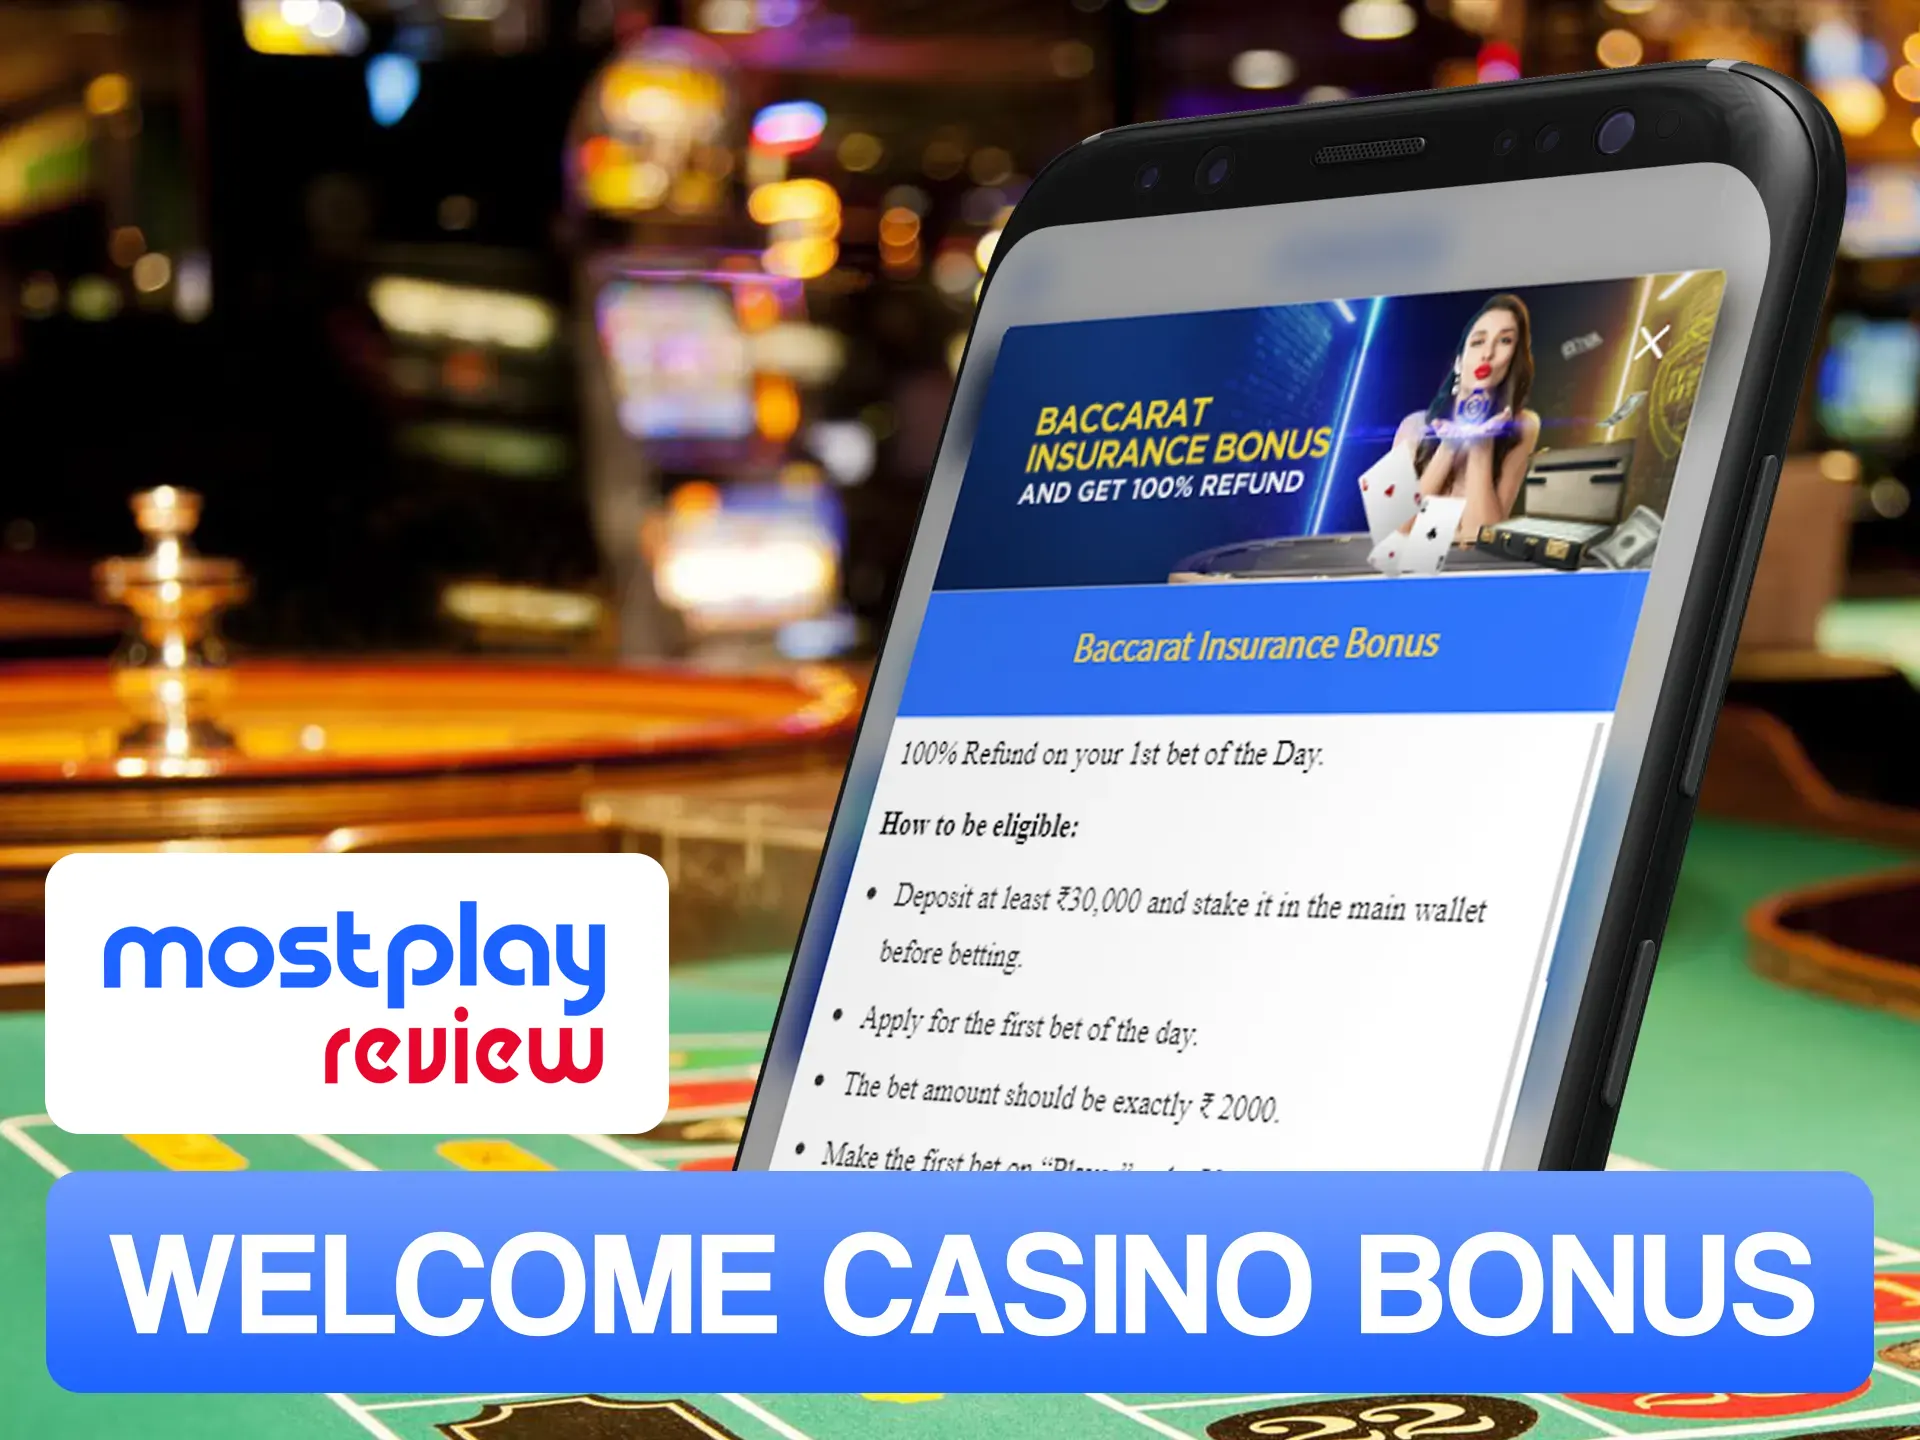 Play casino games at Mostplay and get casino bonuses.